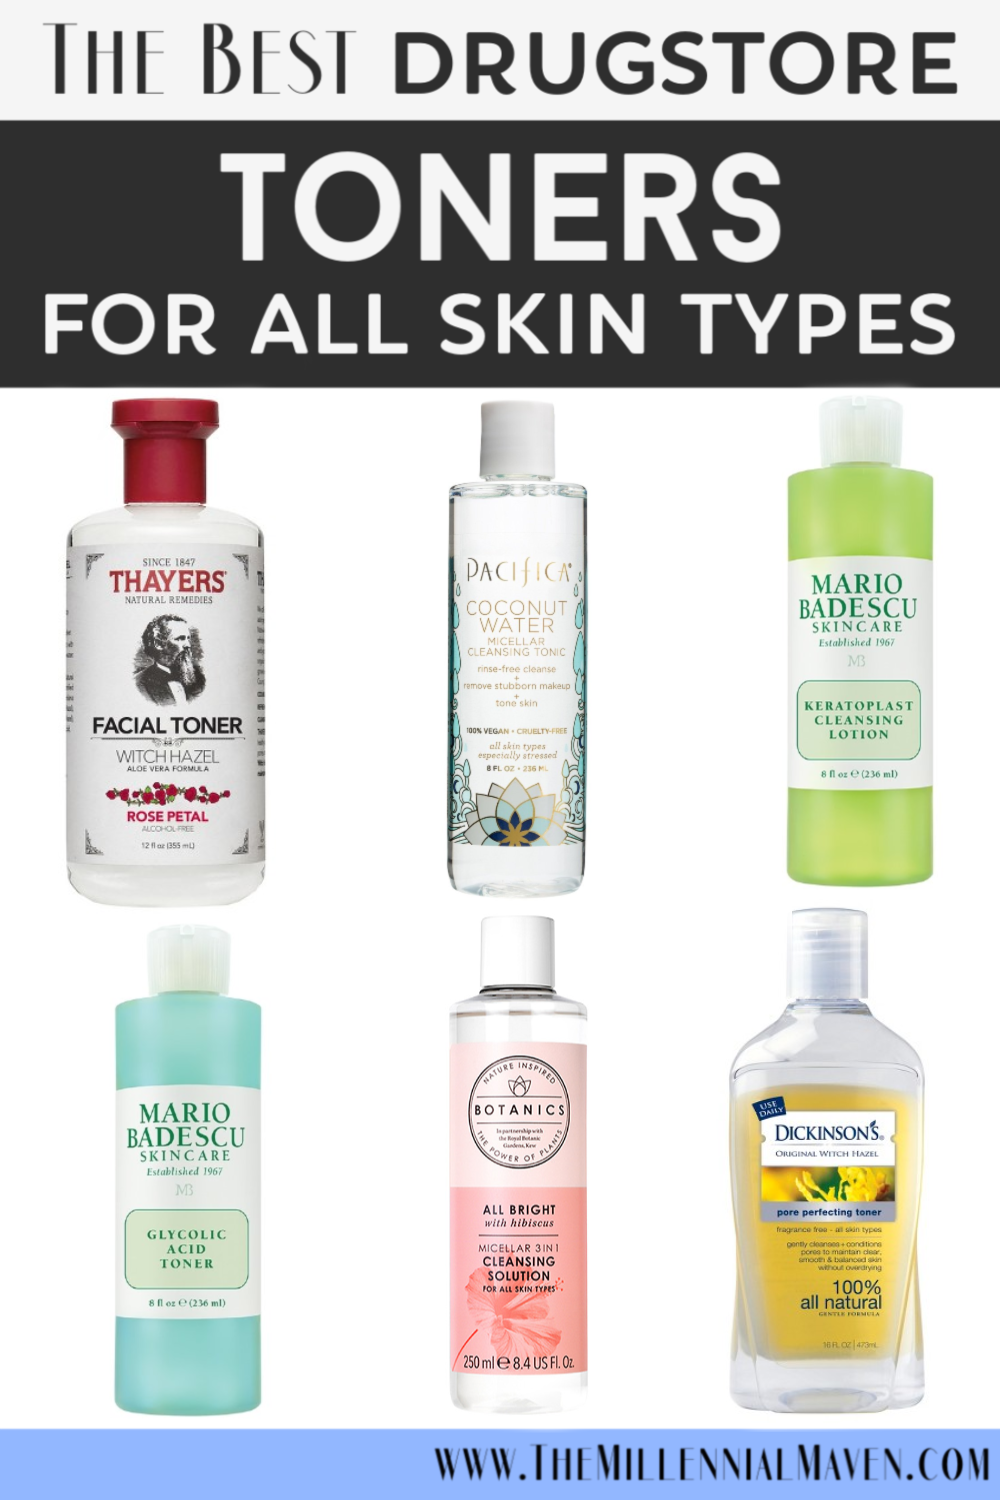 The best drugstore toners in 2019 for all skin types. These are the best drugstore toners for oily skin, acne prone skin, sensitive skin, and dry skin!